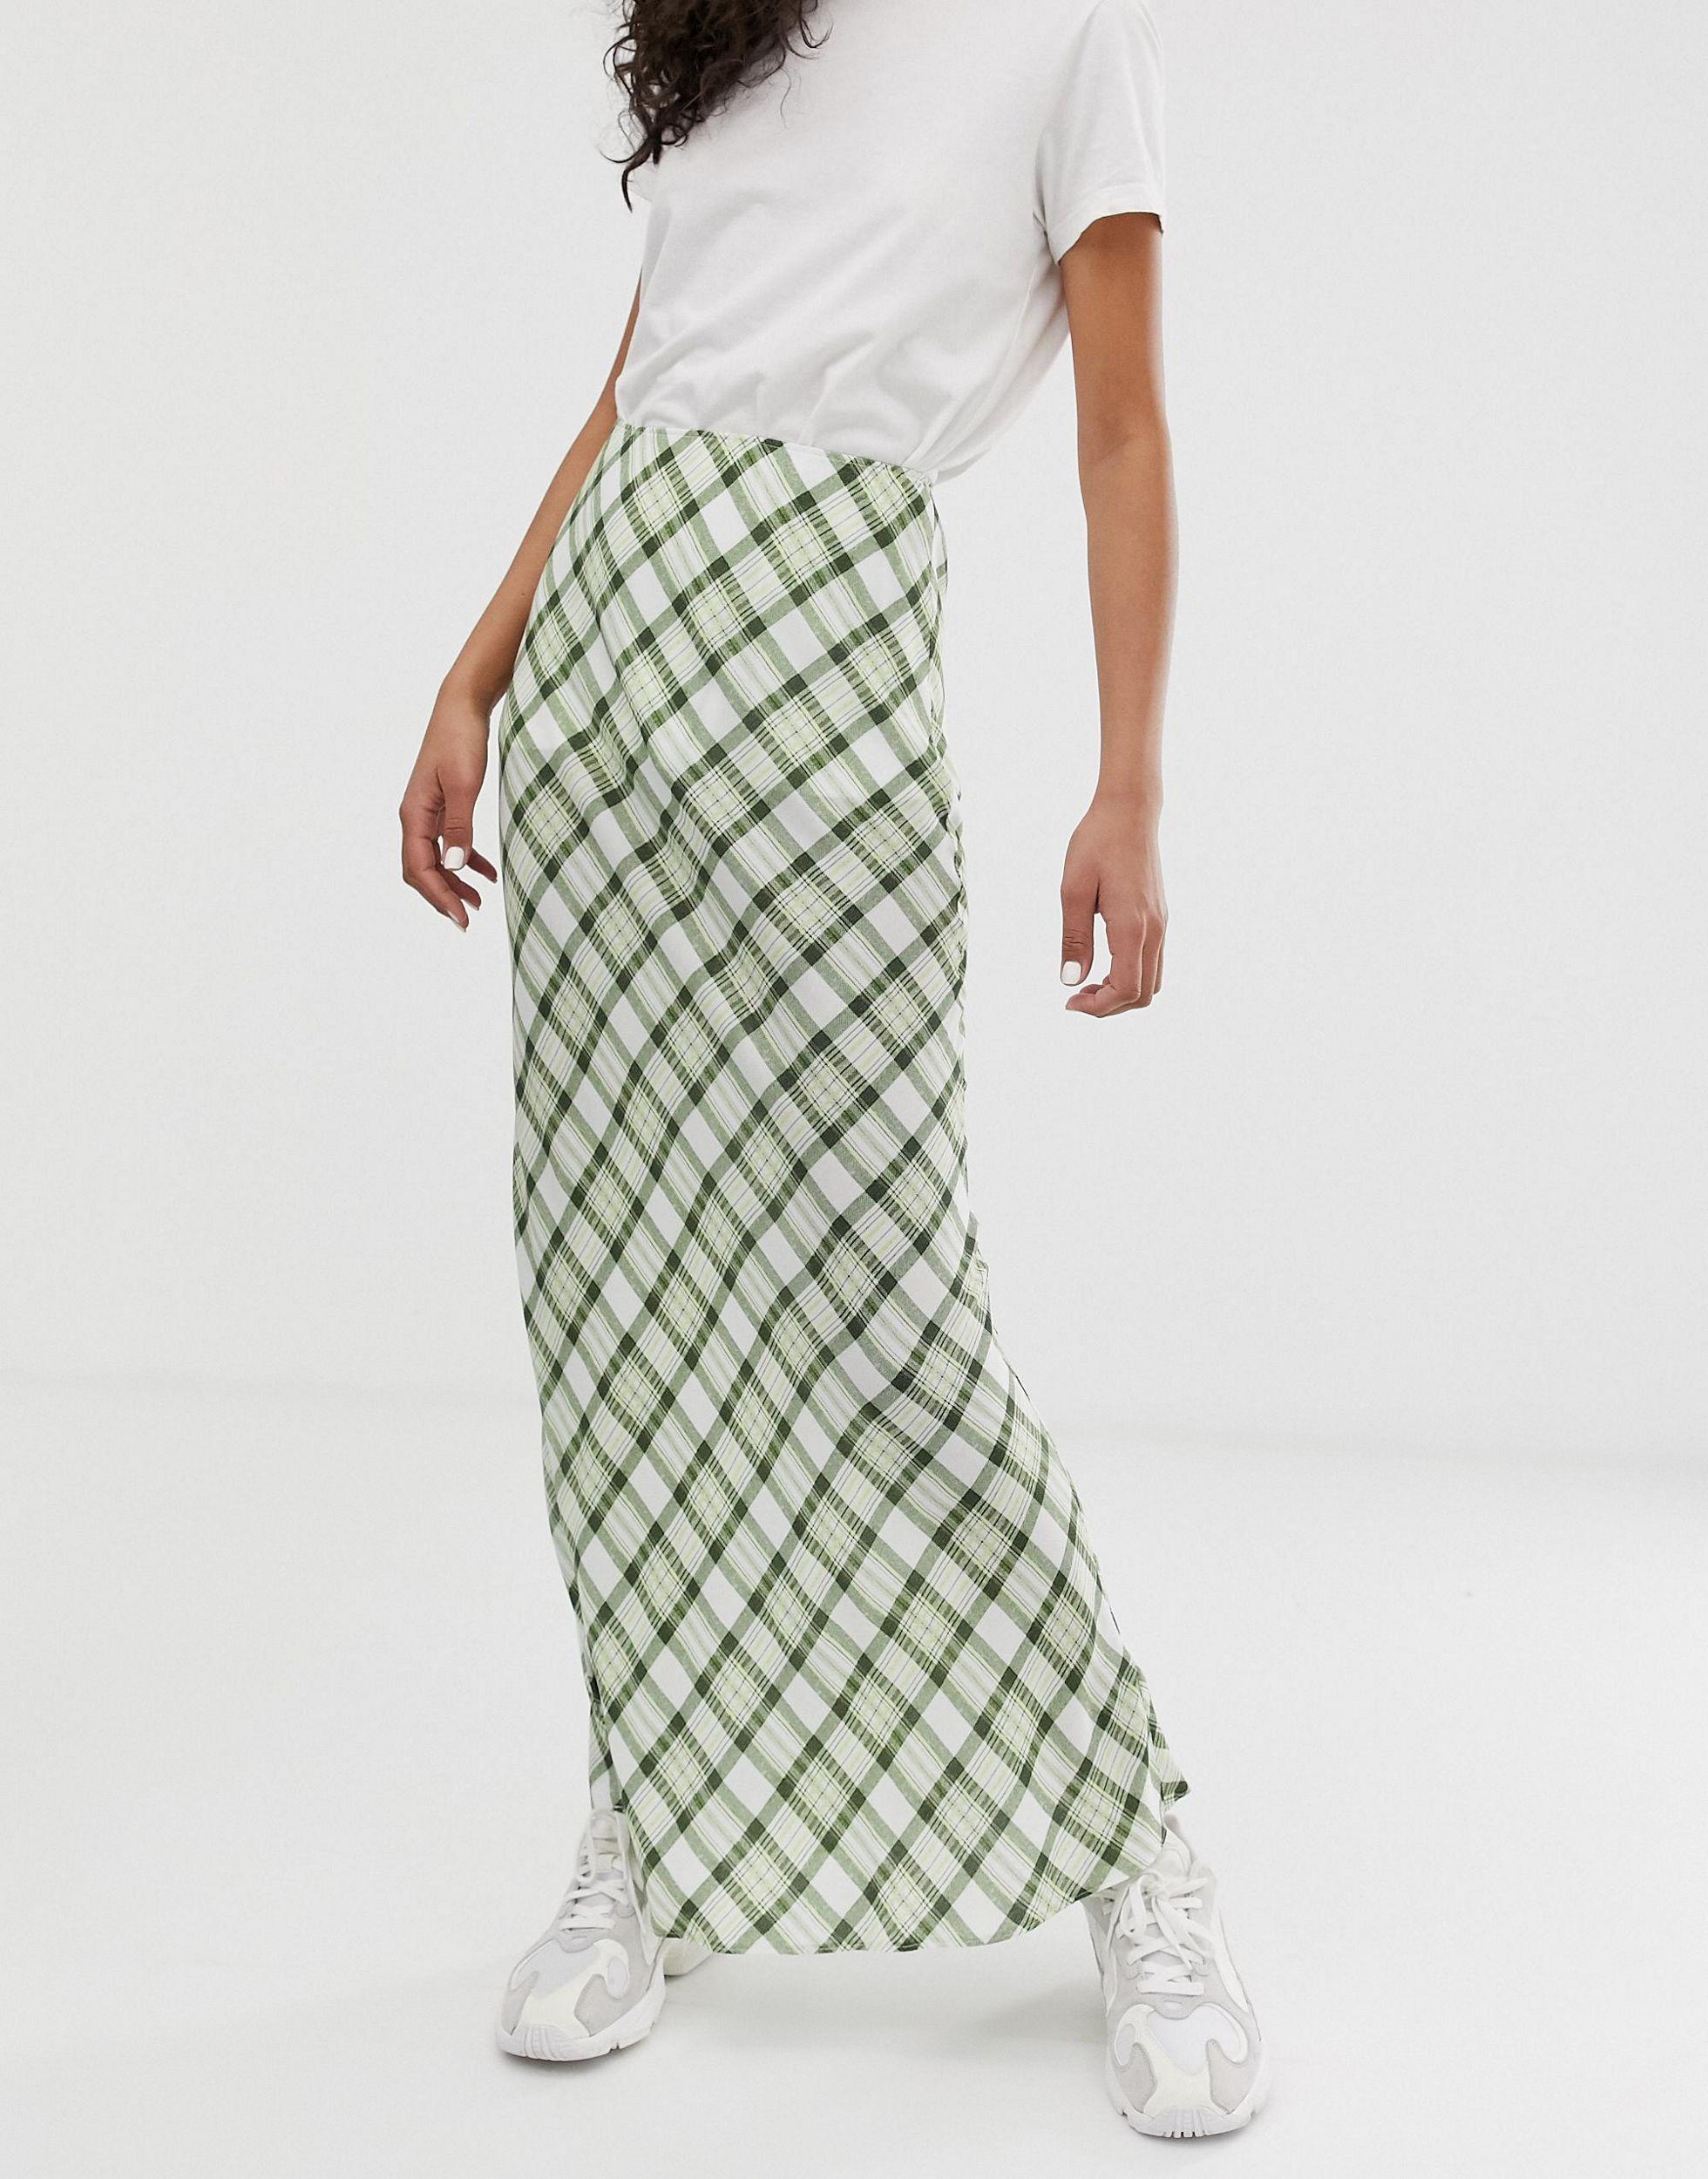 ASOS Asos Design Tall Check Print Bias Cut City Maxi Skirt in Green | Lyst